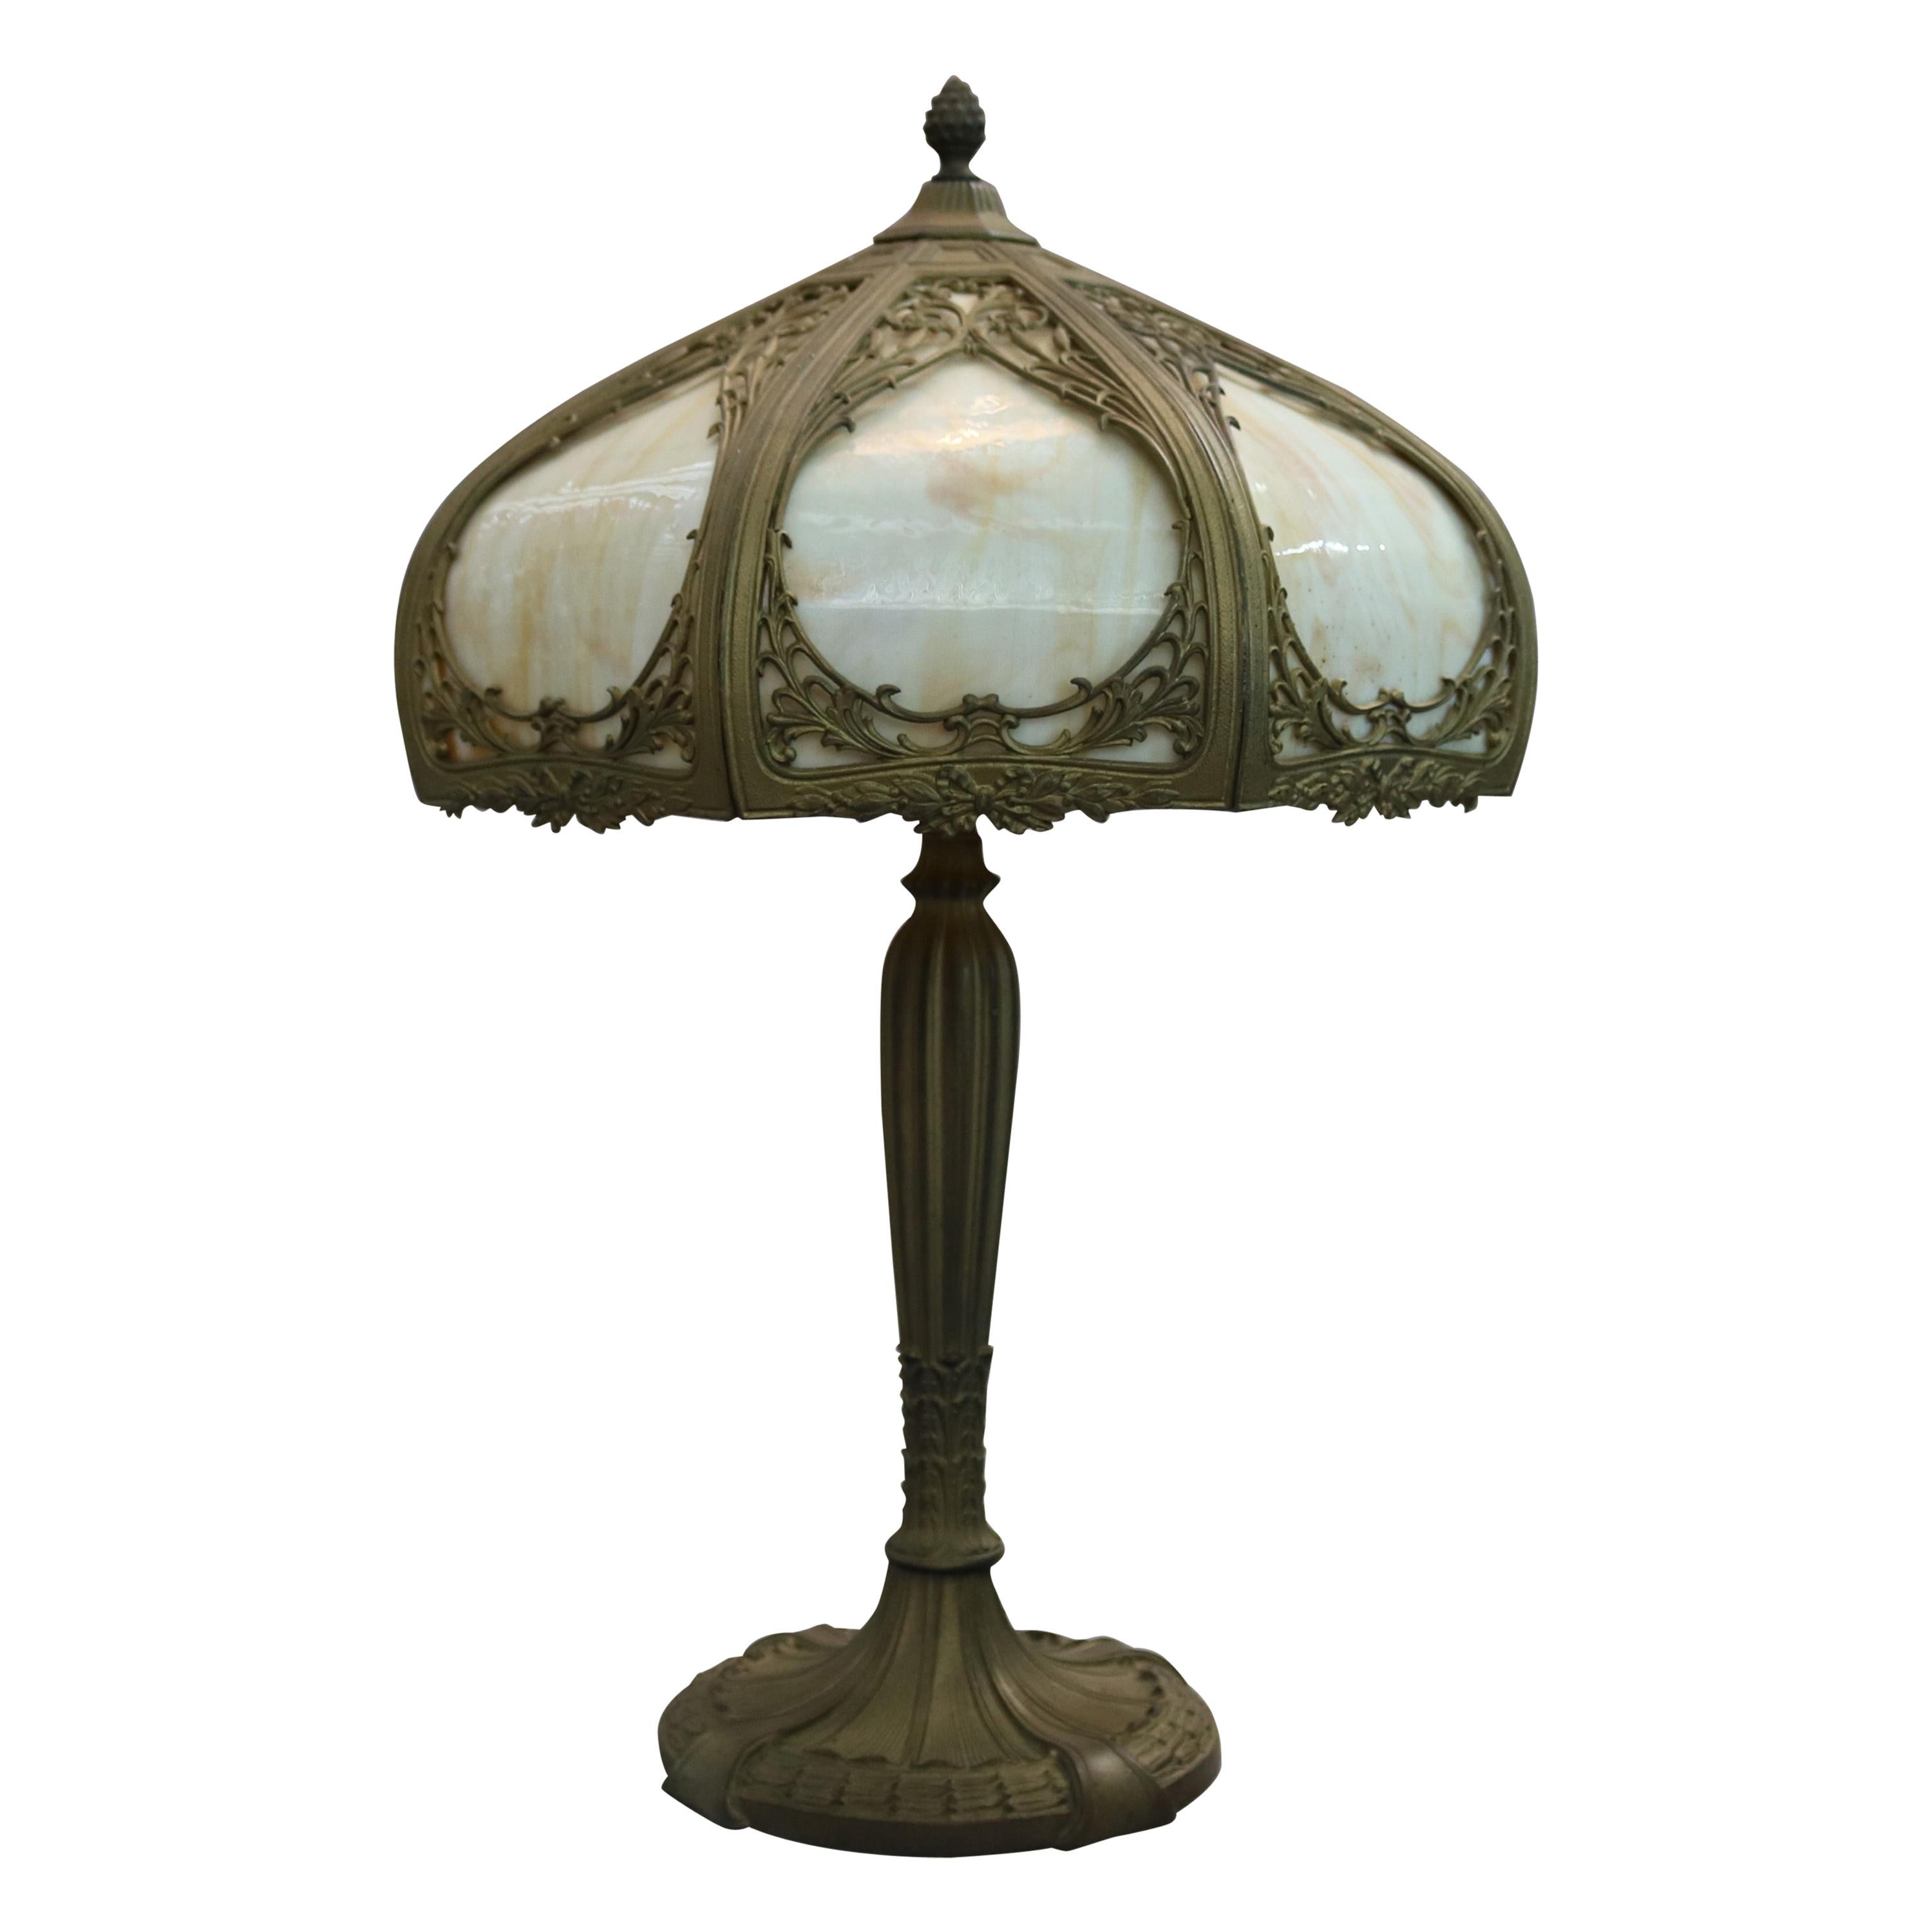 Antique Arts & Crafts Miller School Slag Glass Table Lamp, c1920